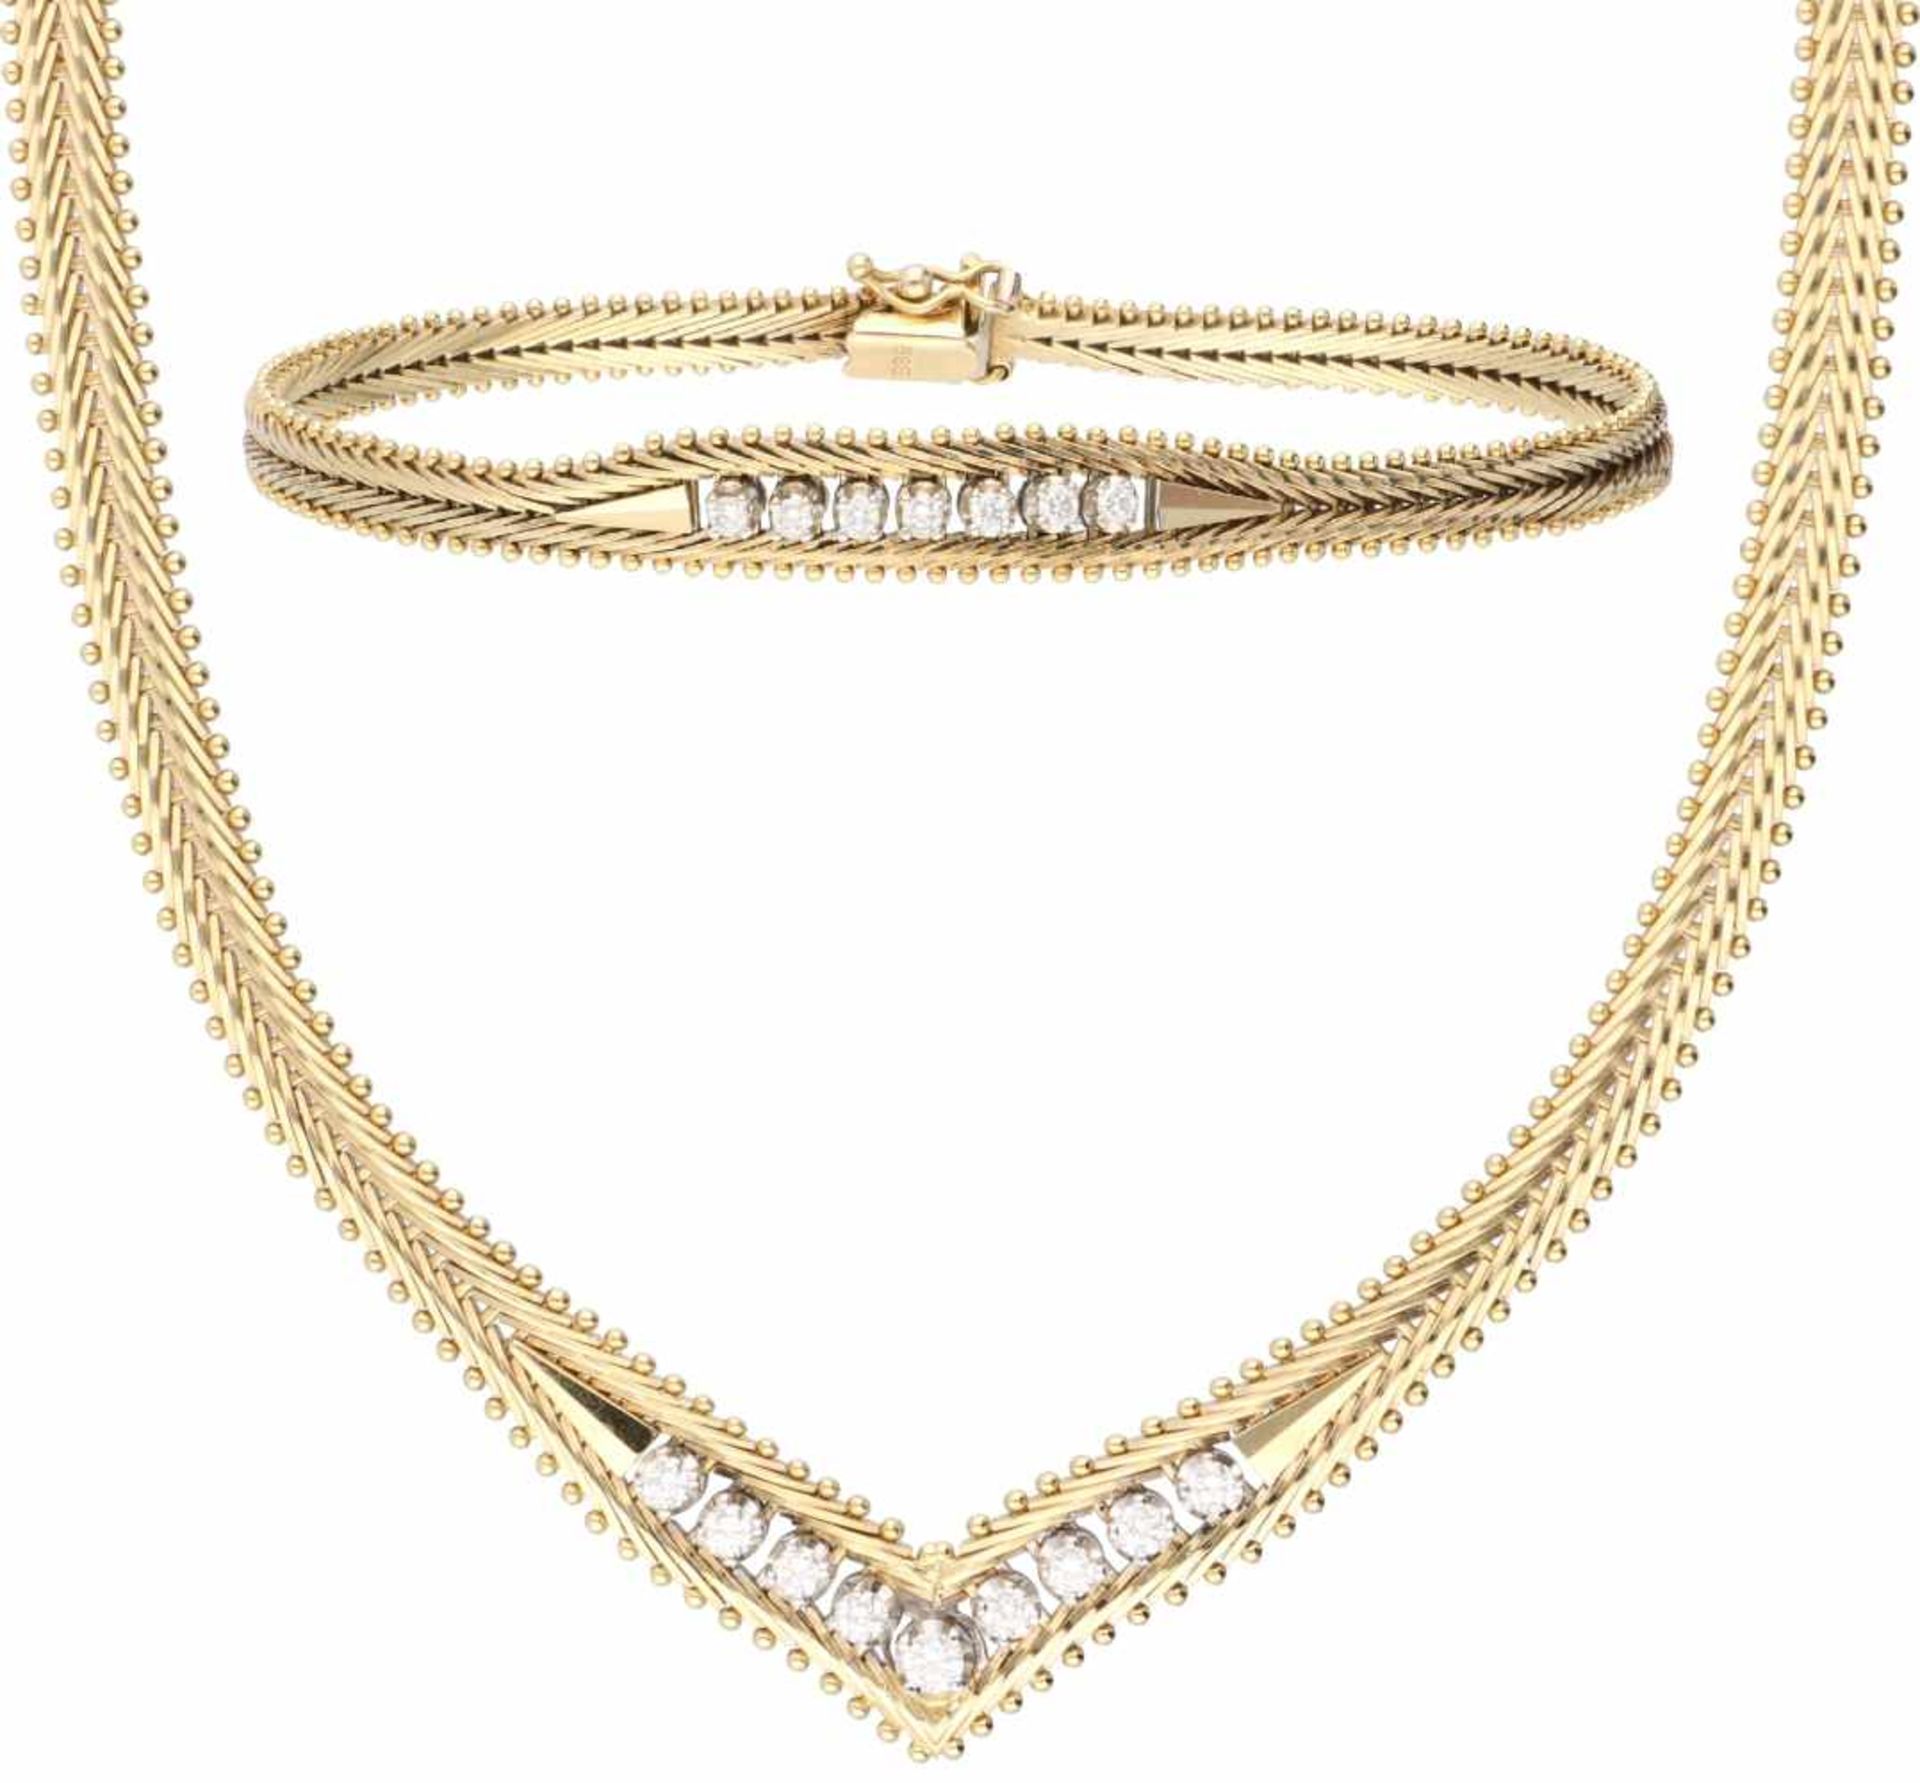 Necklace / bracelet yellow gold, ca. 0.43 carat diamond - 14 ct.